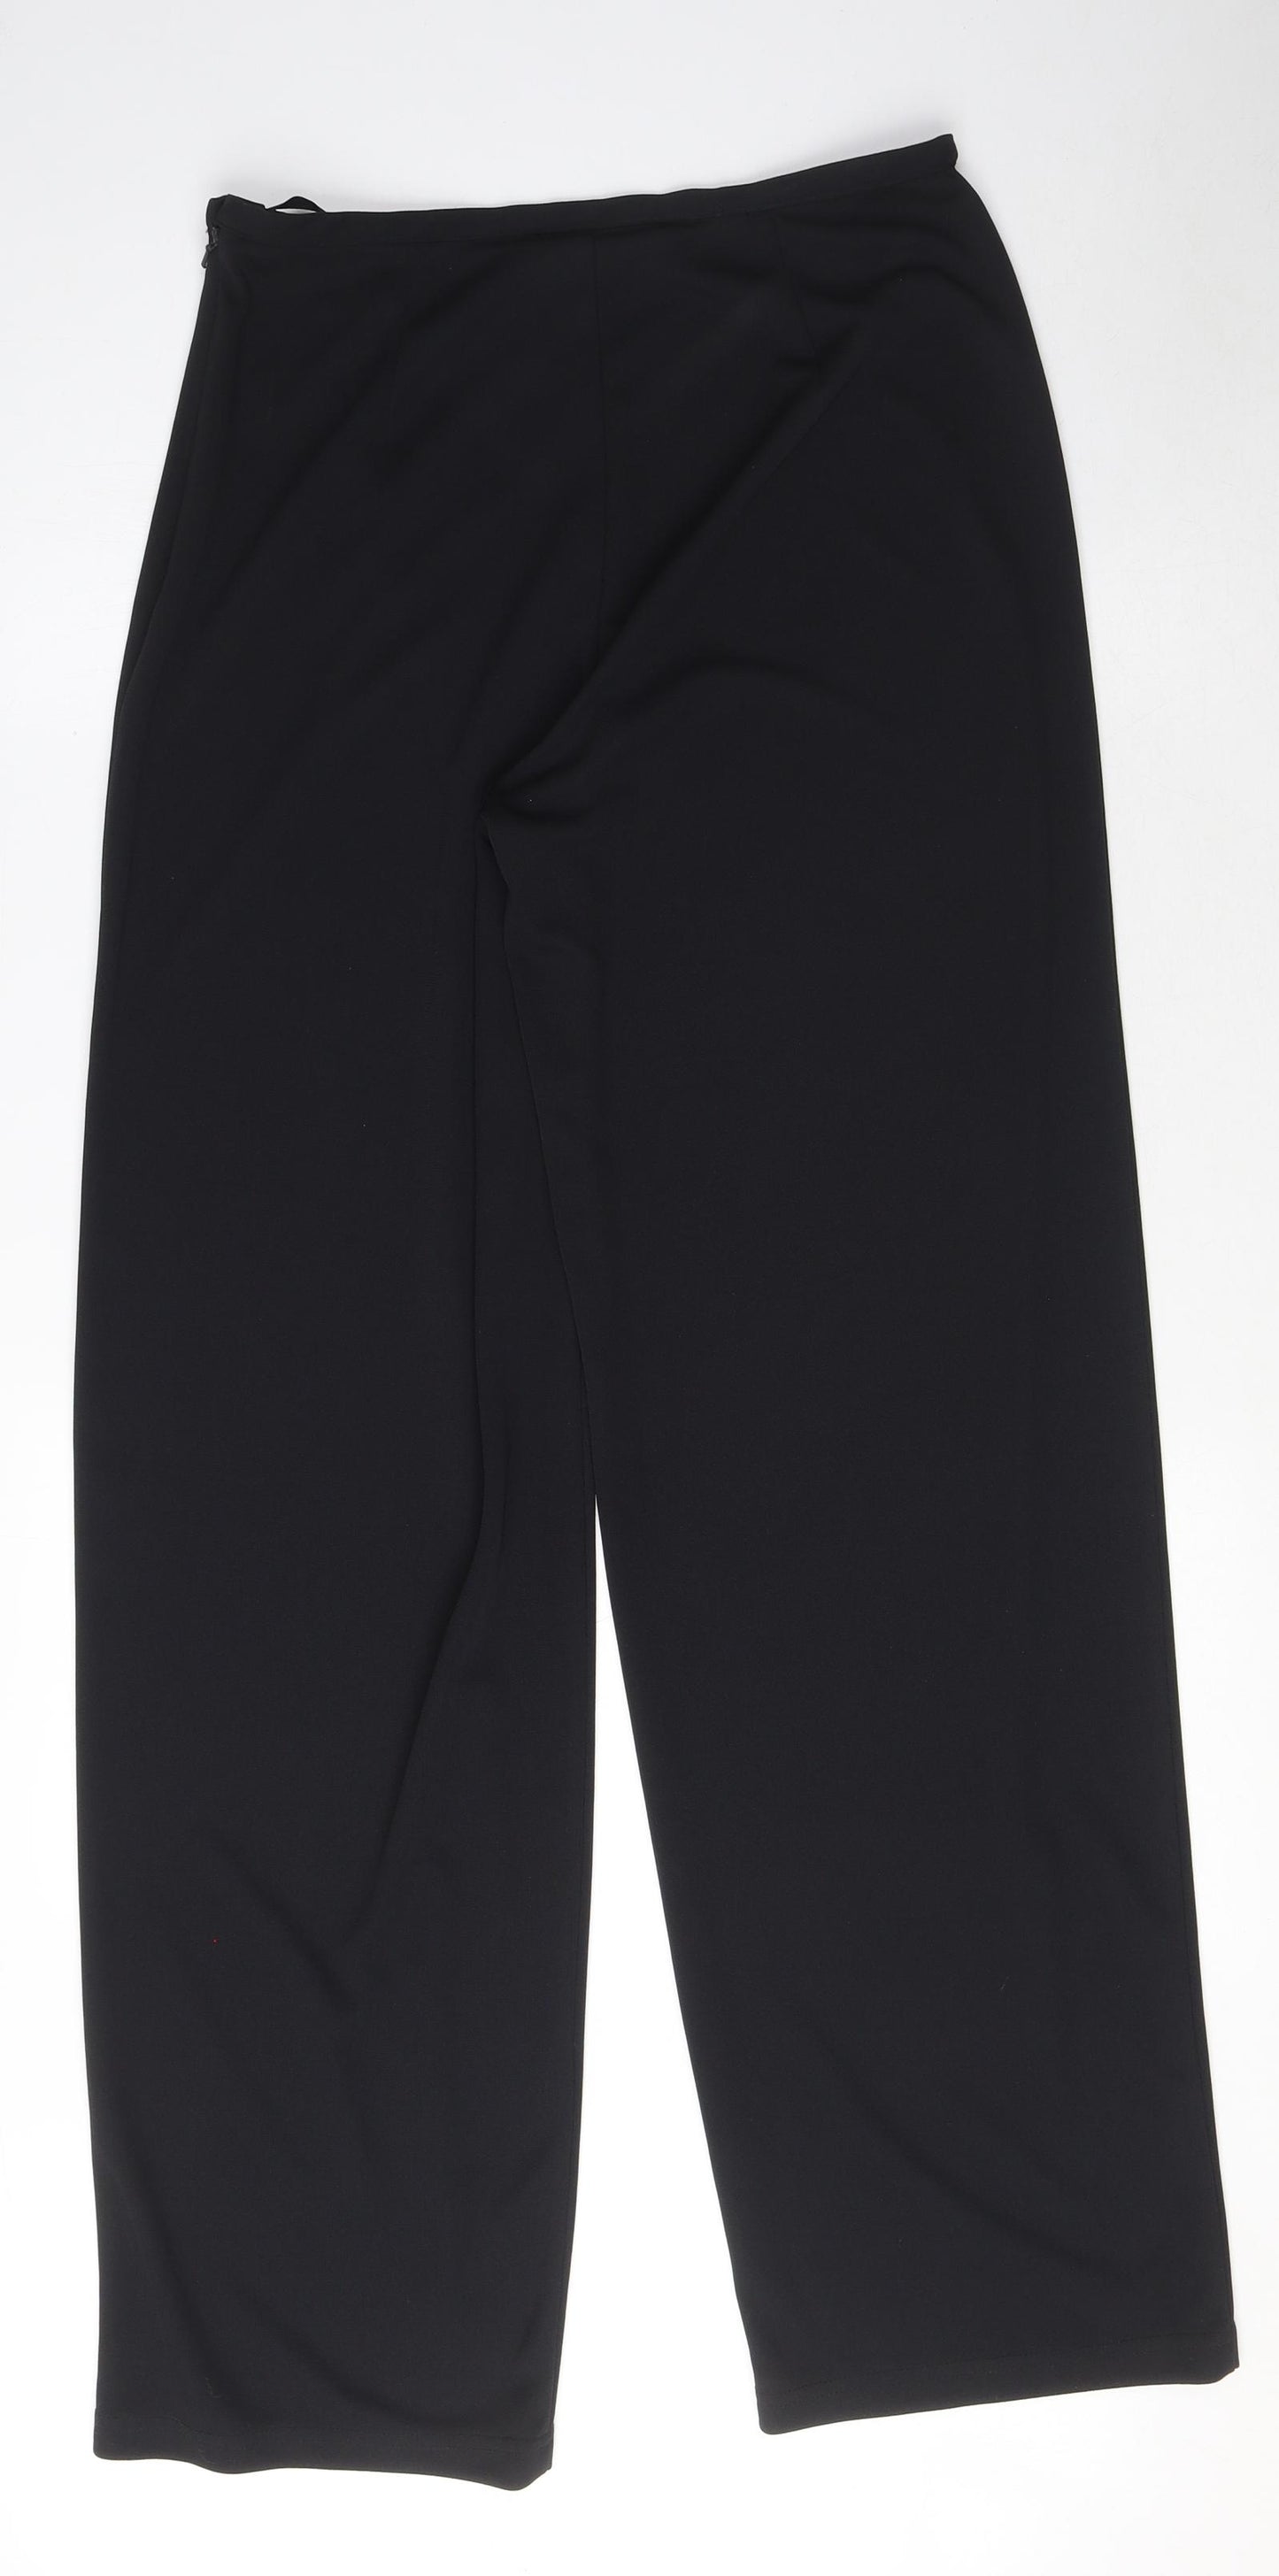 CCDK Copenhagen Womens Black Polyester Dress Pants Trousers Size 12 L32 in Regular Zip